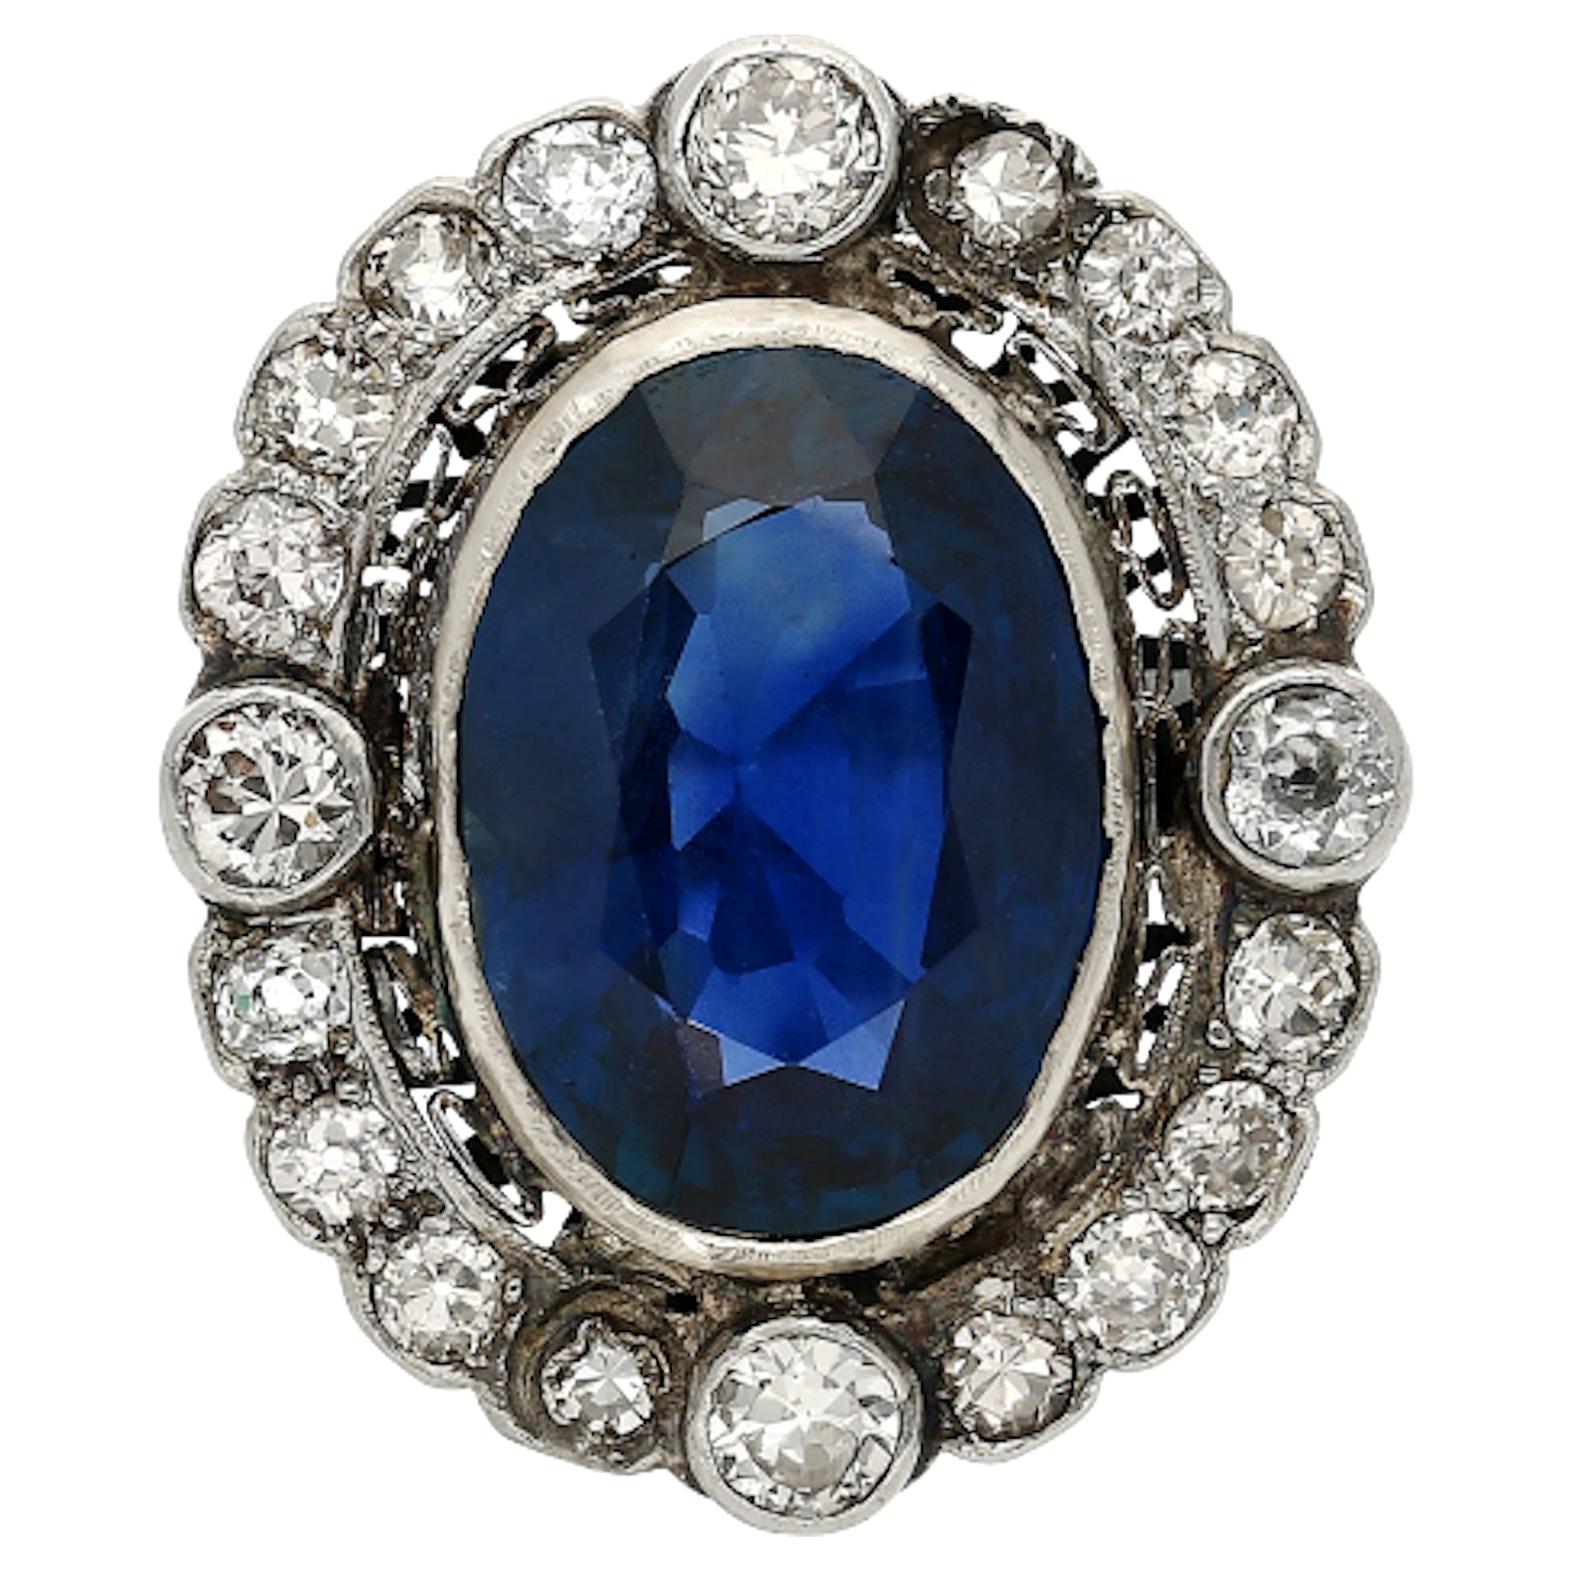 19th Century Victorian-Era 15 Carat Burma Oval-Cut Sapphire and Diamond Ring For Sale